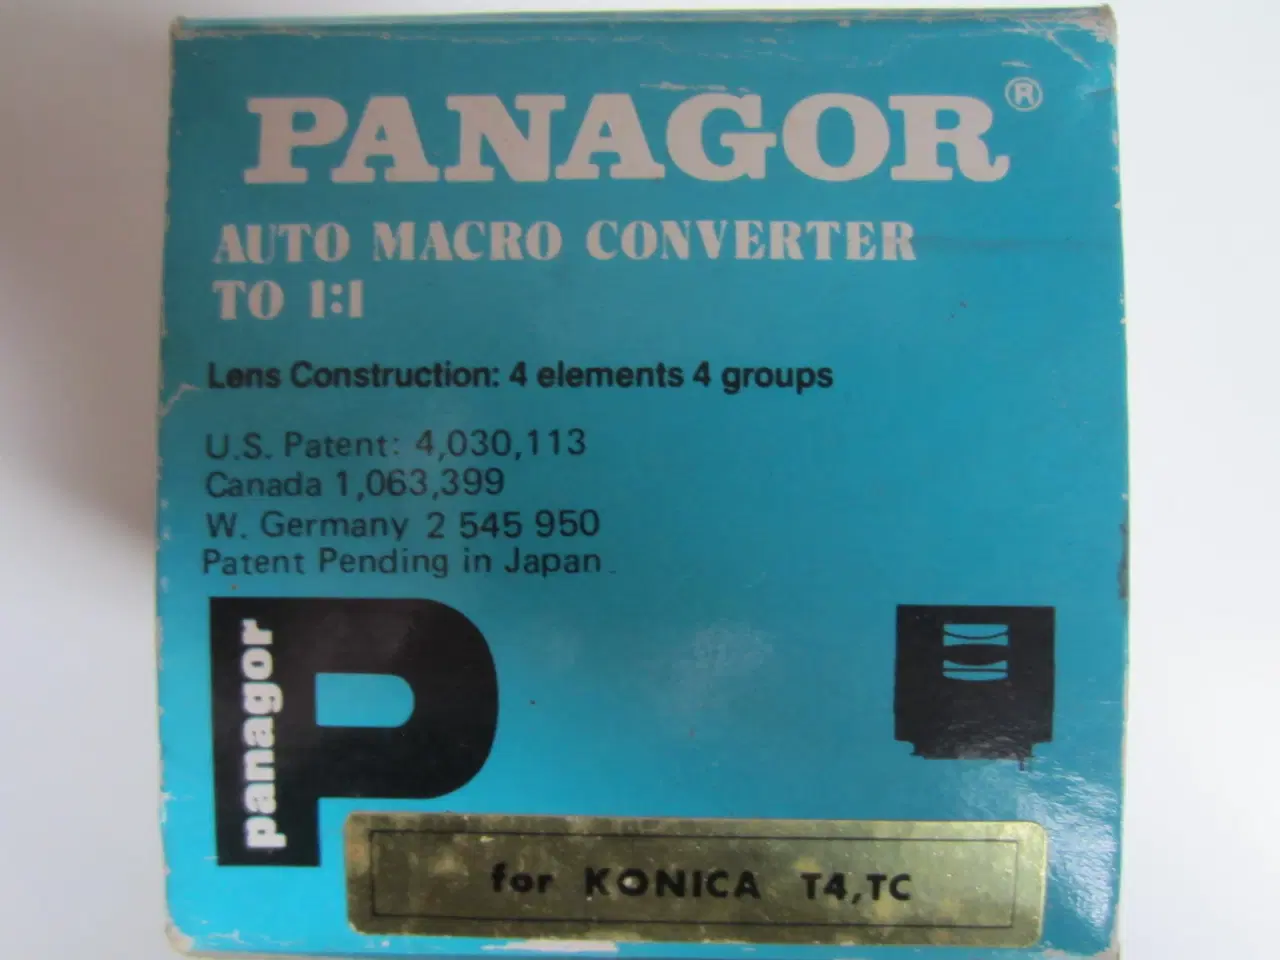 Billede 1 - PANAGOR Auto Macro Converter til 1:1